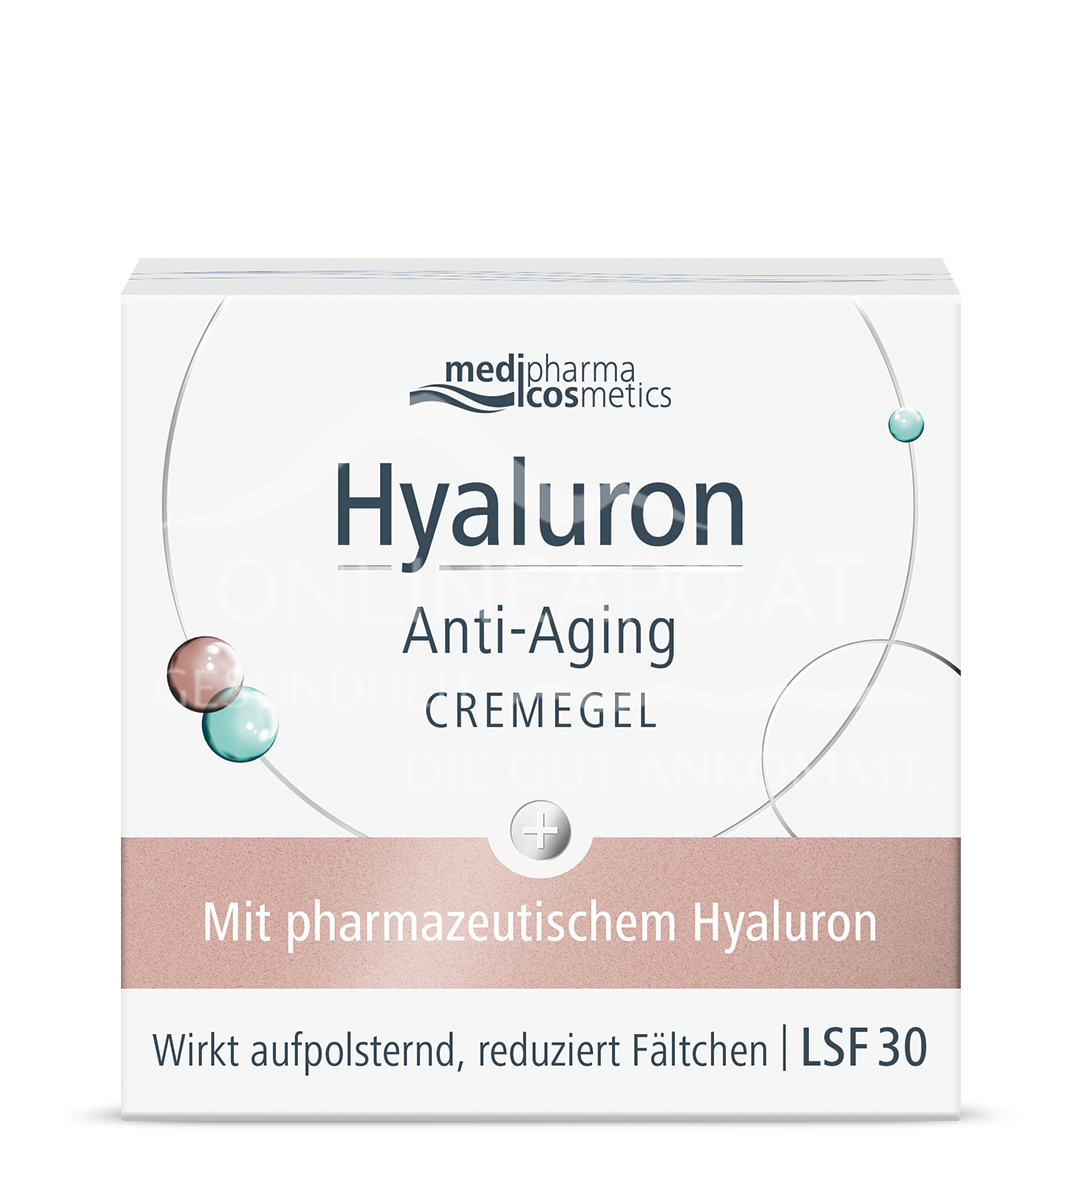 medipharma cosmetics Hyaluron Anti-Aging Cremegel